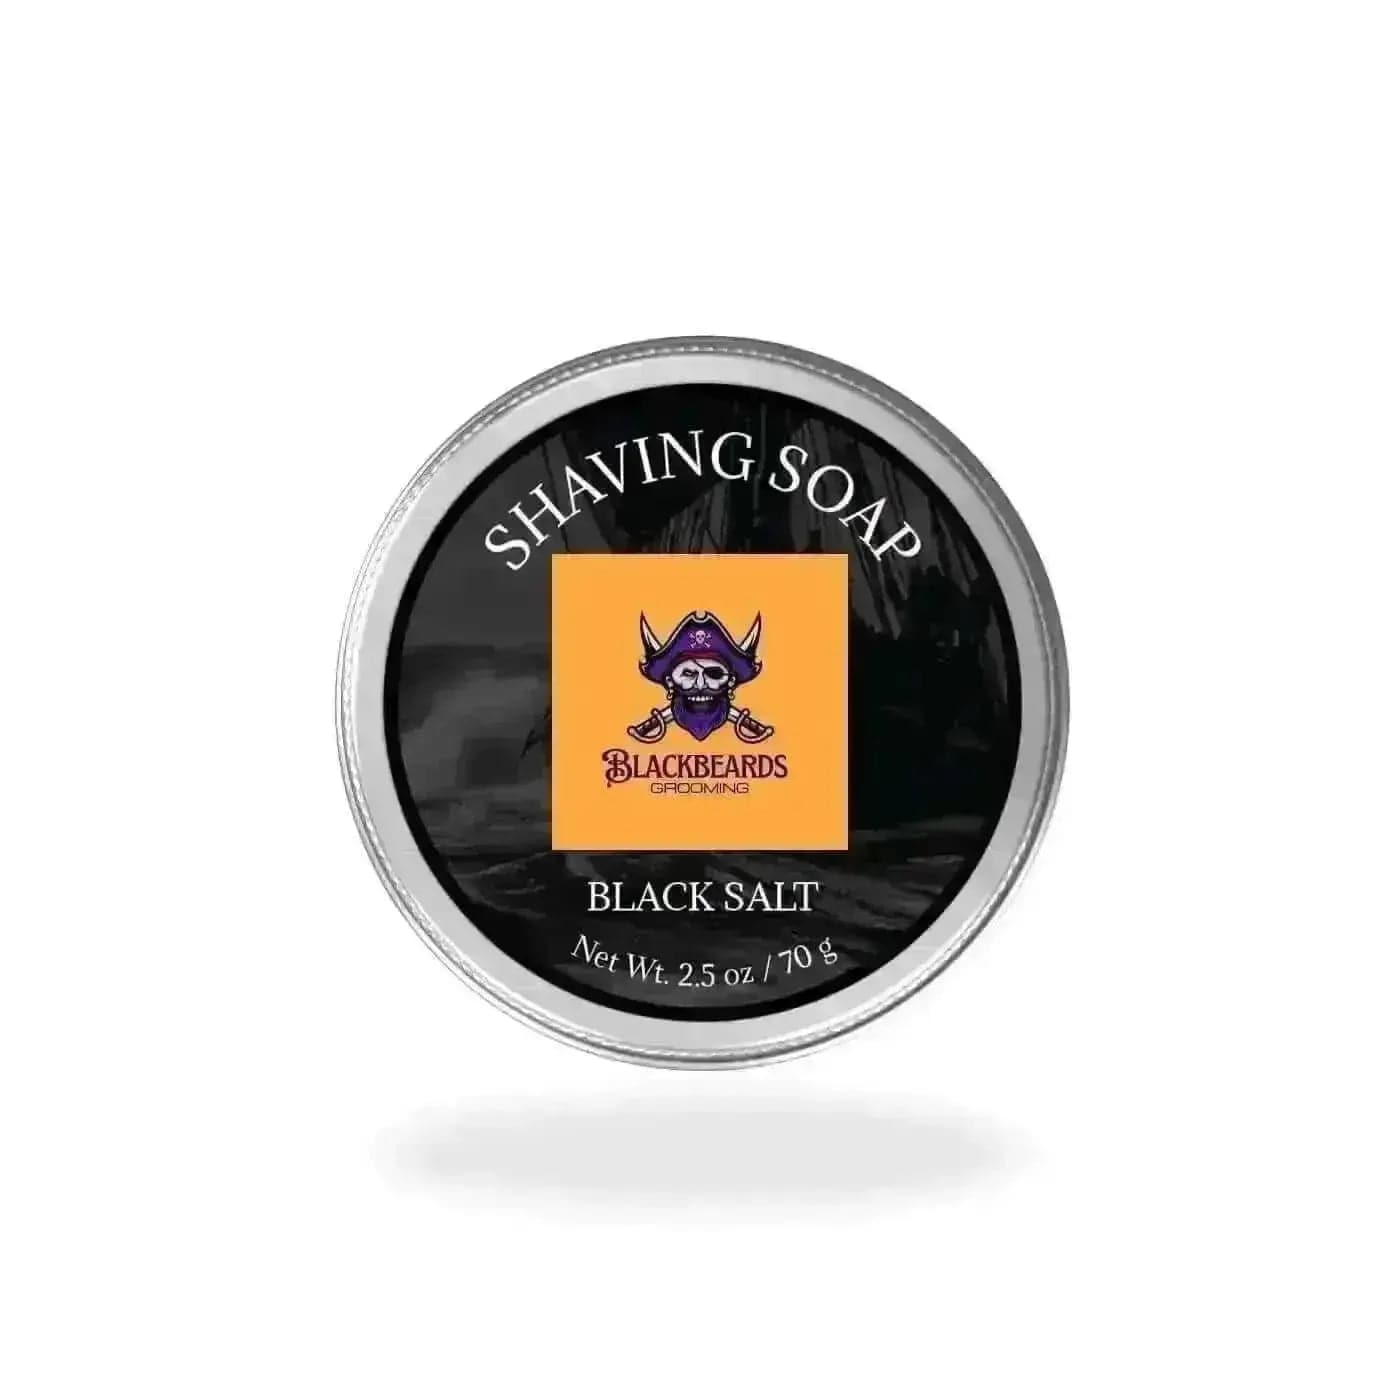 black salt shaving soap in a tin on a white background